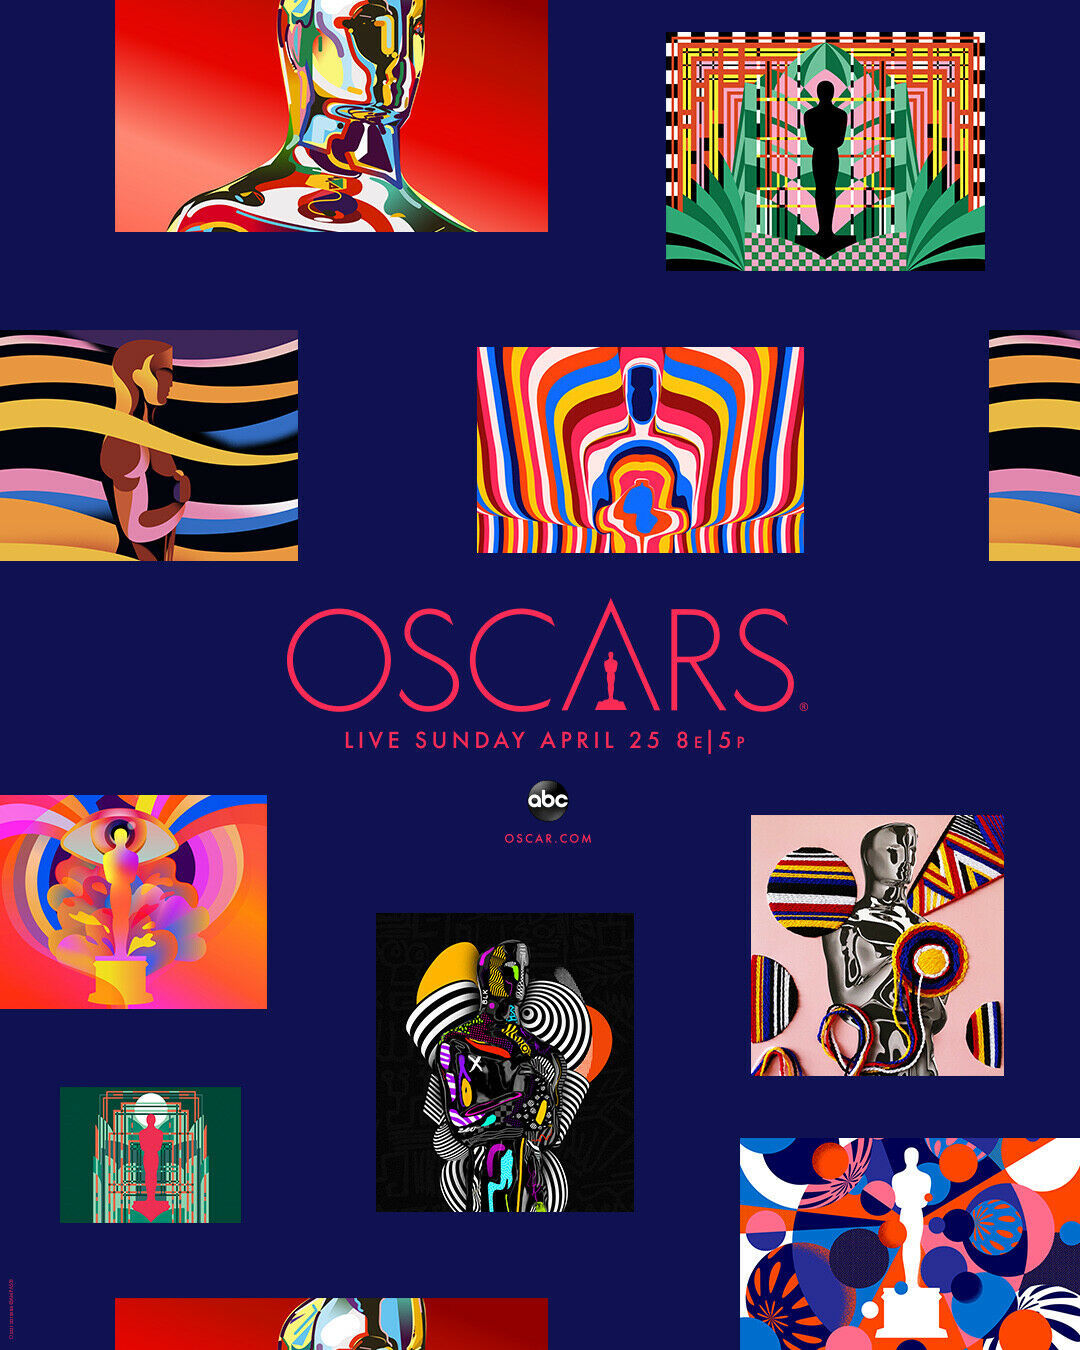 OSCARS 93rd Annual Academy Awards Official POSTER, Small FOLDER